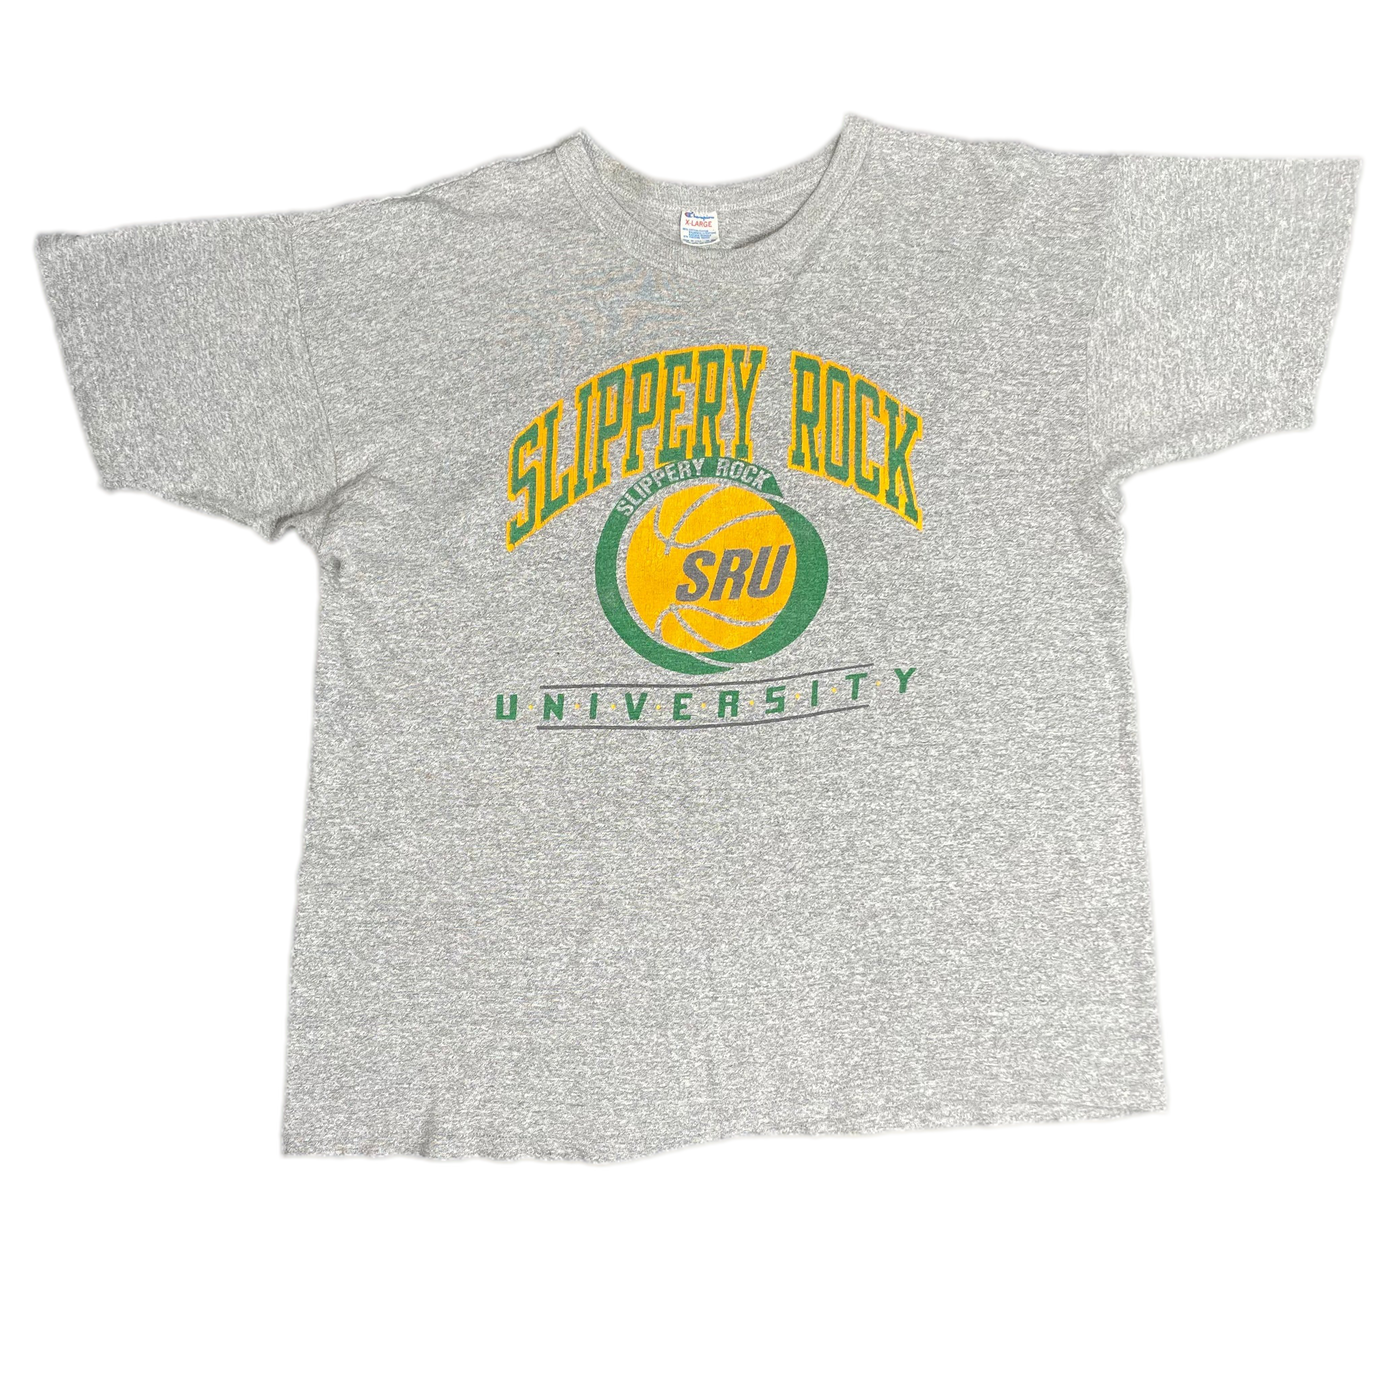 90's Slippery Rock University Gray Sports T-shirt sz L